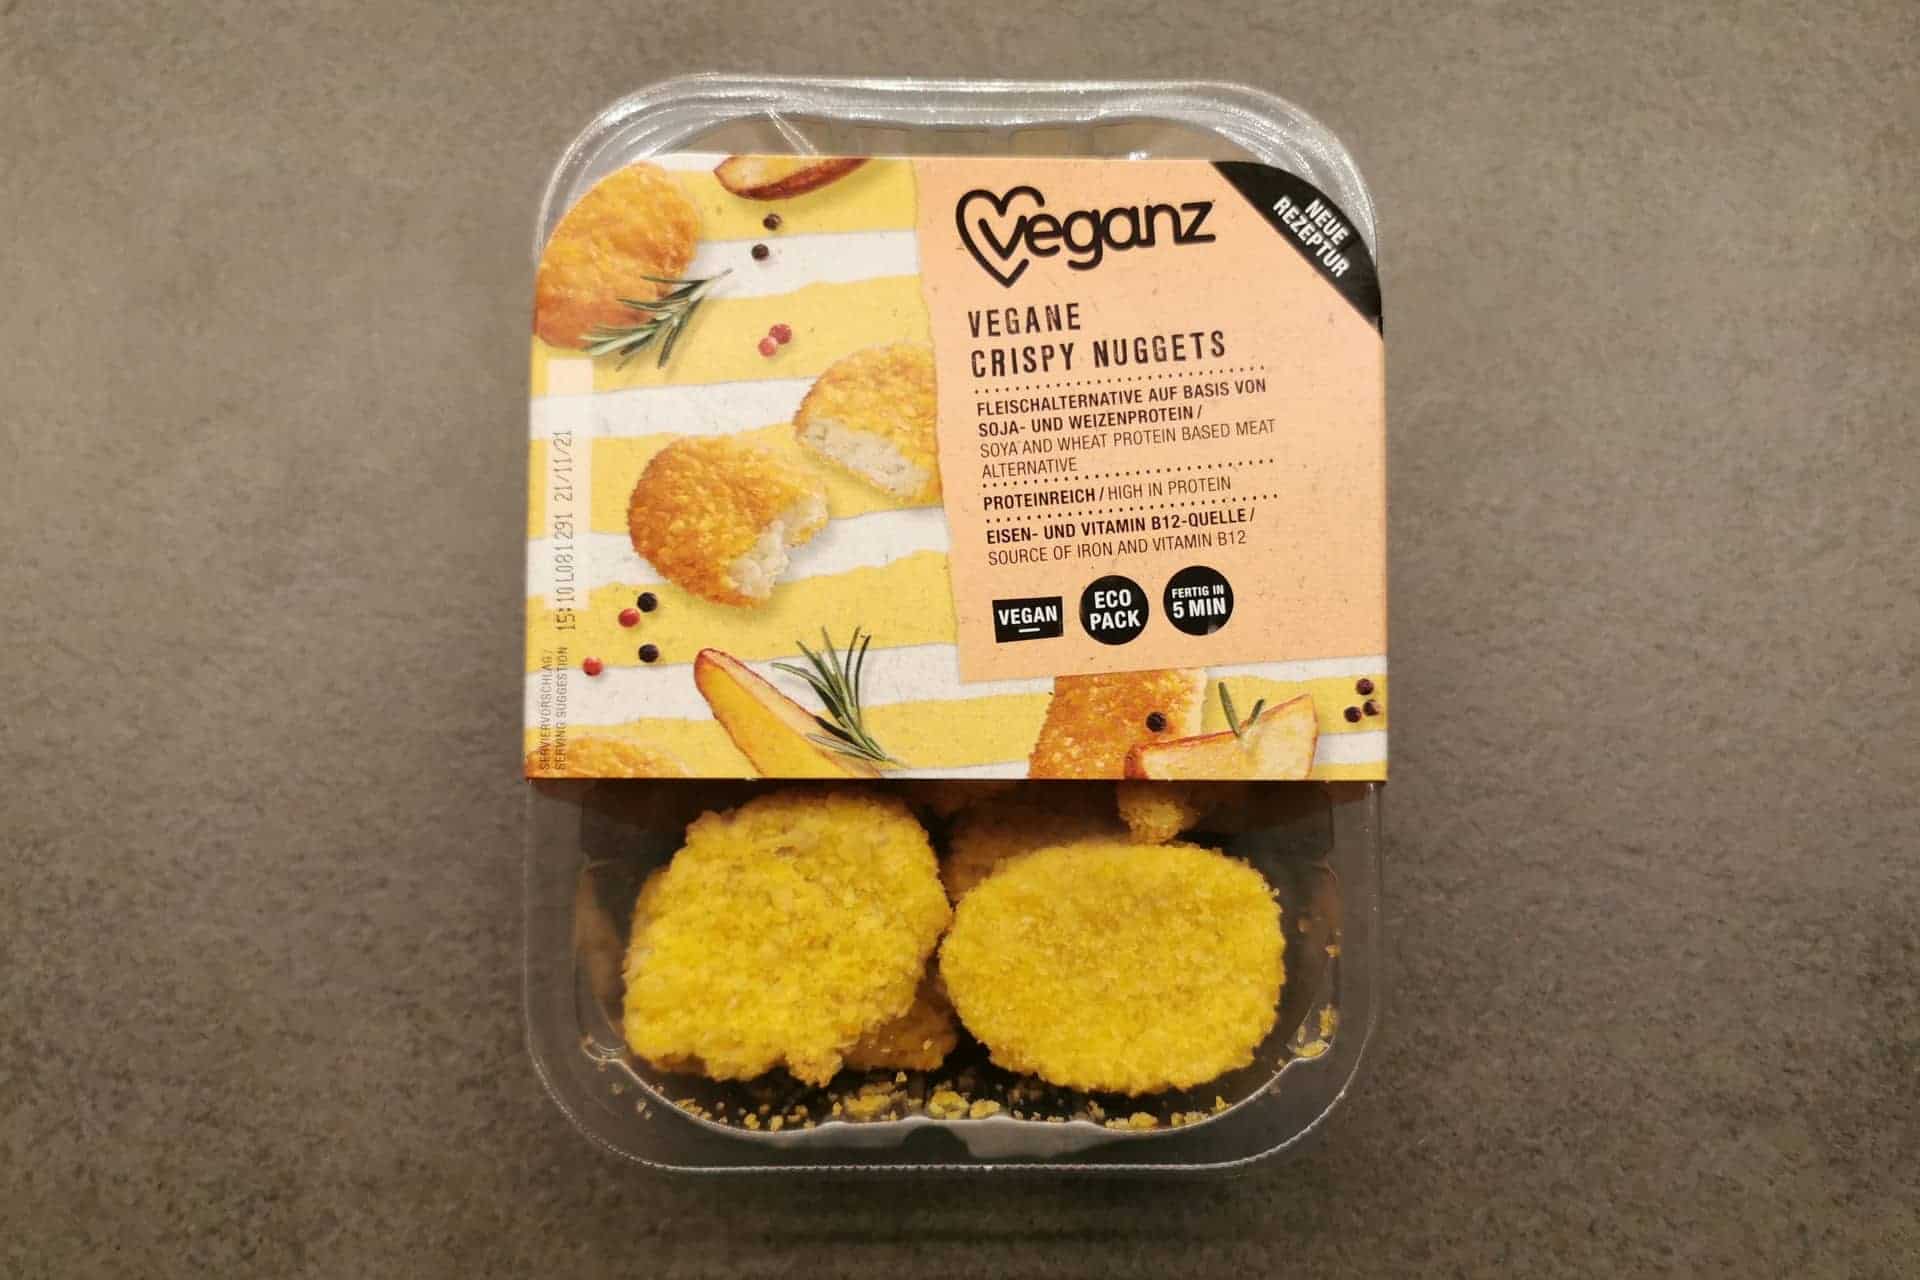 Veganz: Vegane Crispy Nuggets